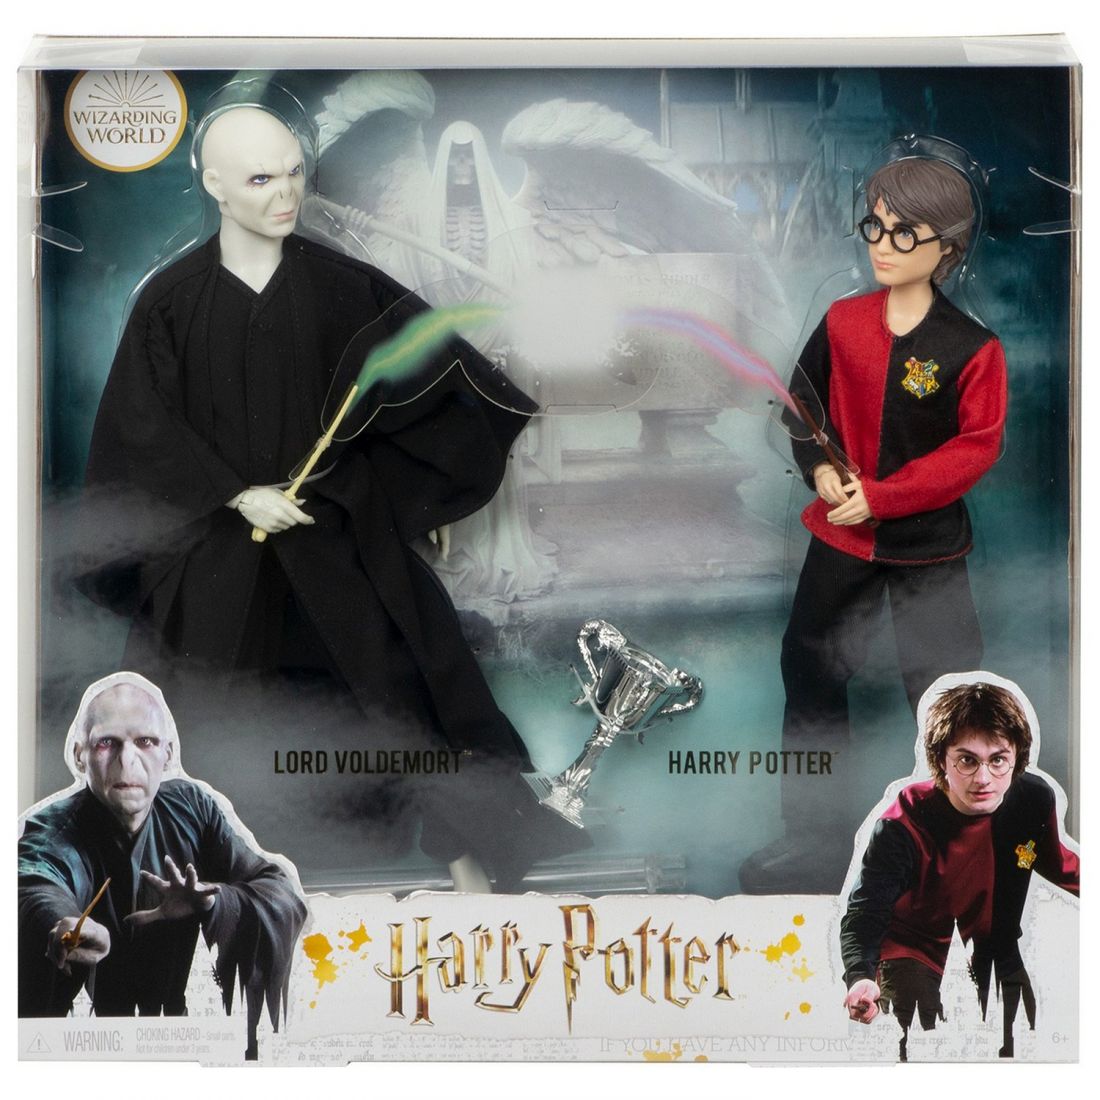 Набор кукол Harry Potter Лорд Волан-де-Морт и Гарри Поттер GNR38